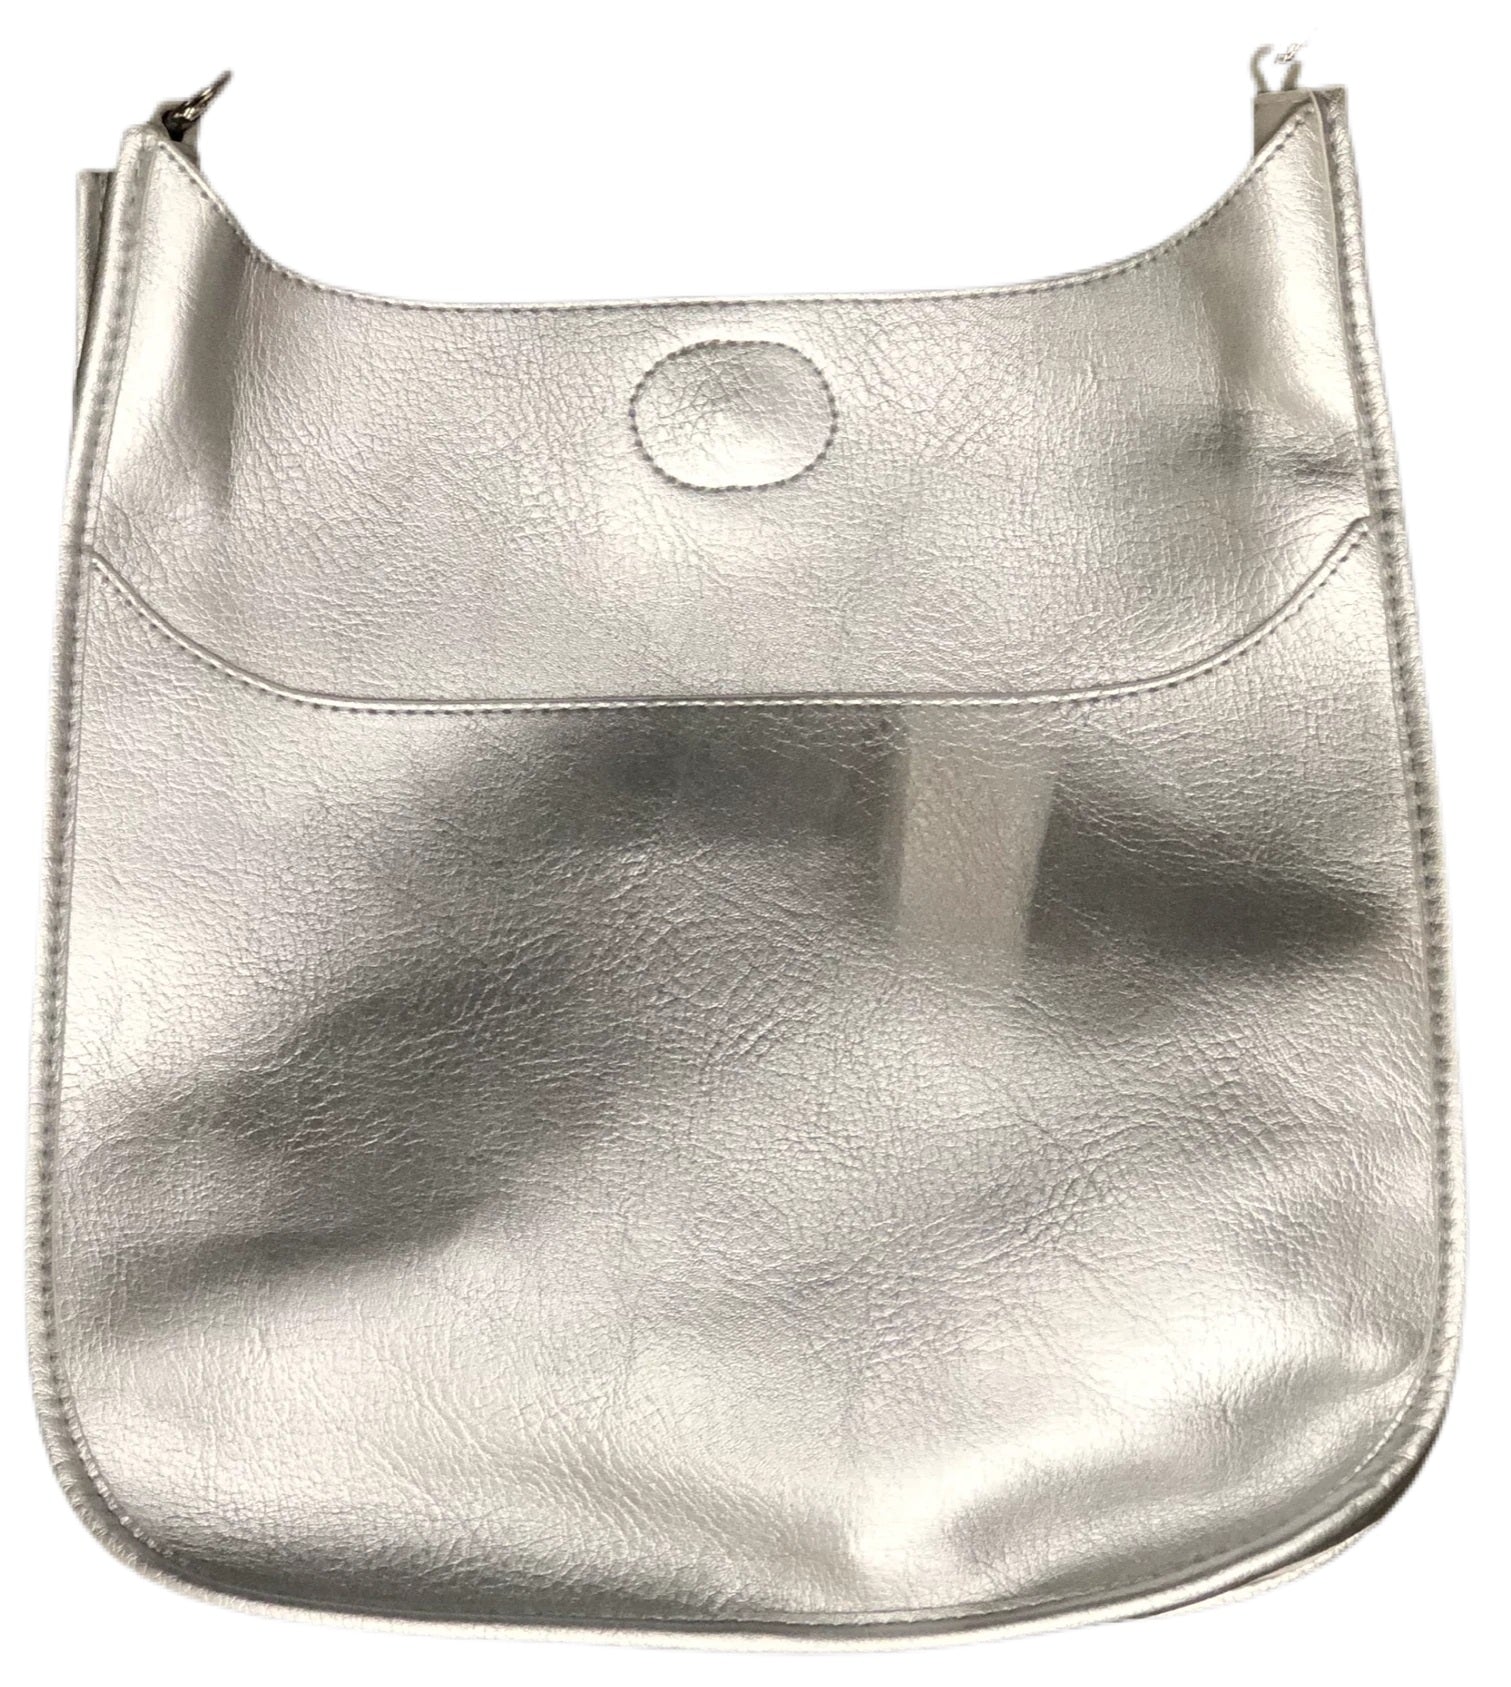 Ahdorned Crossbody Bag With Tassell — Carolee's